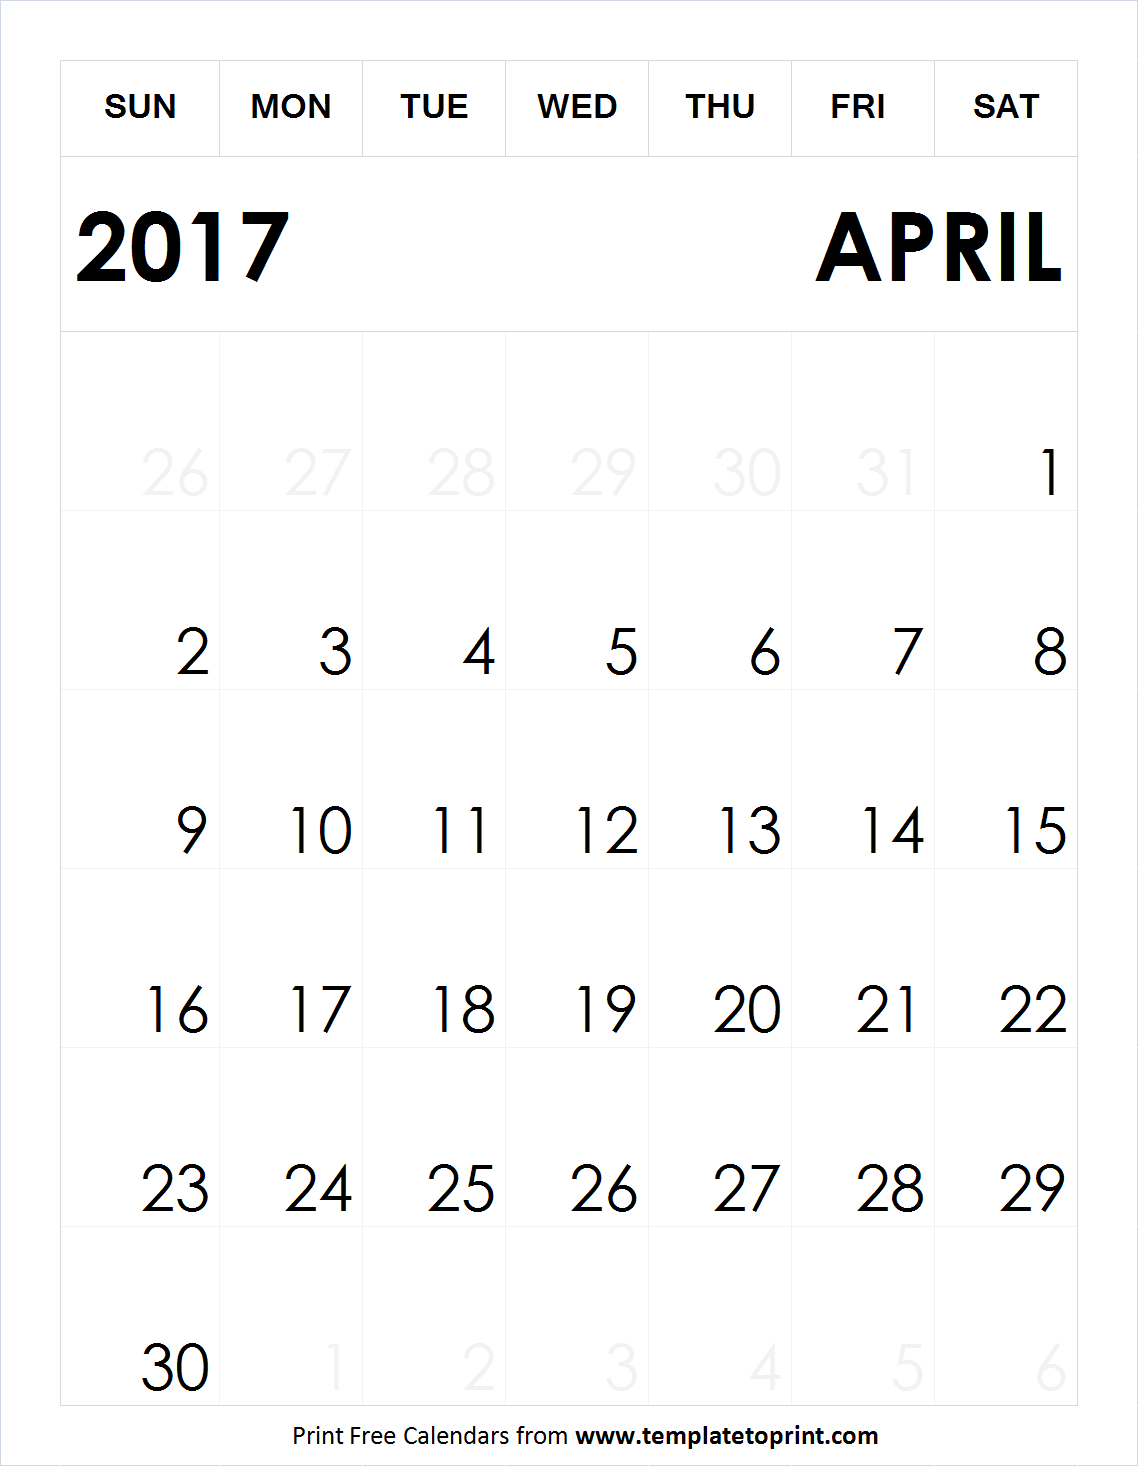 April.